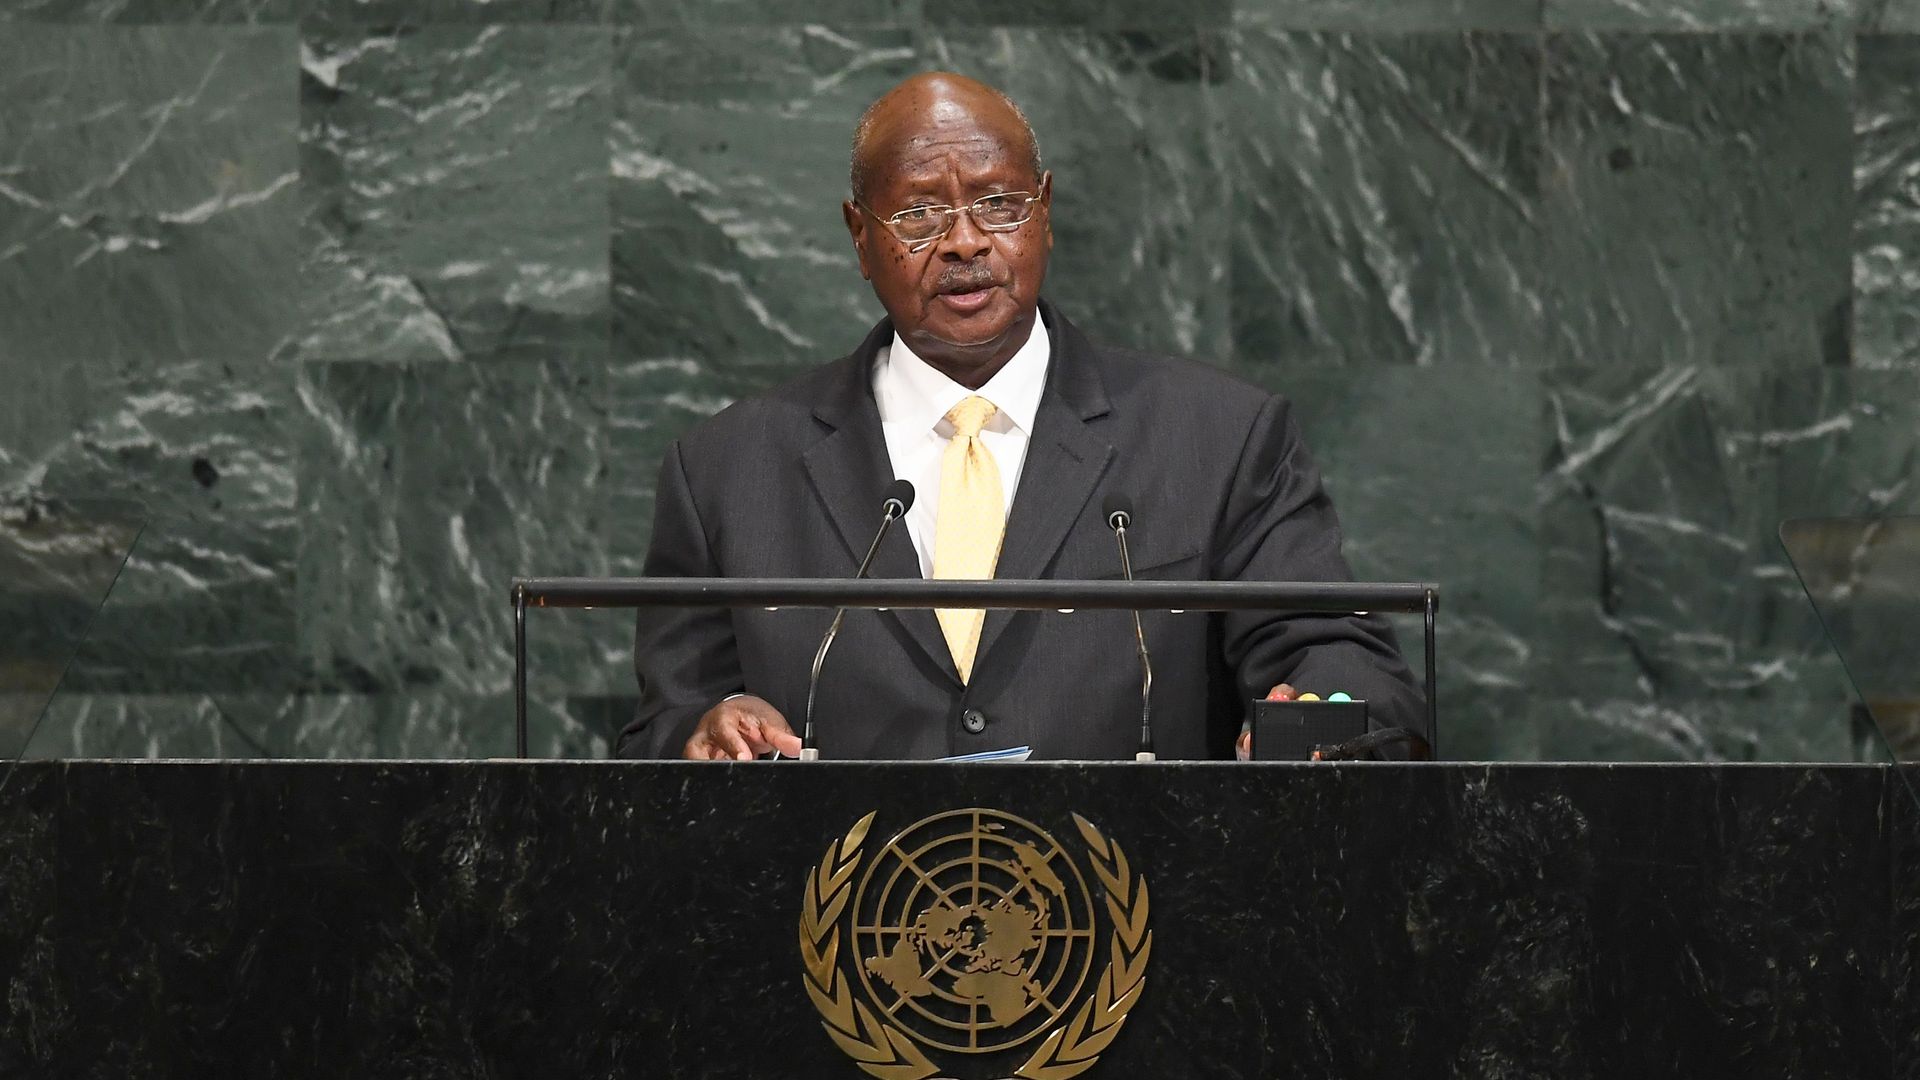 Ugandan President Museveni at lectern at UN Assembly